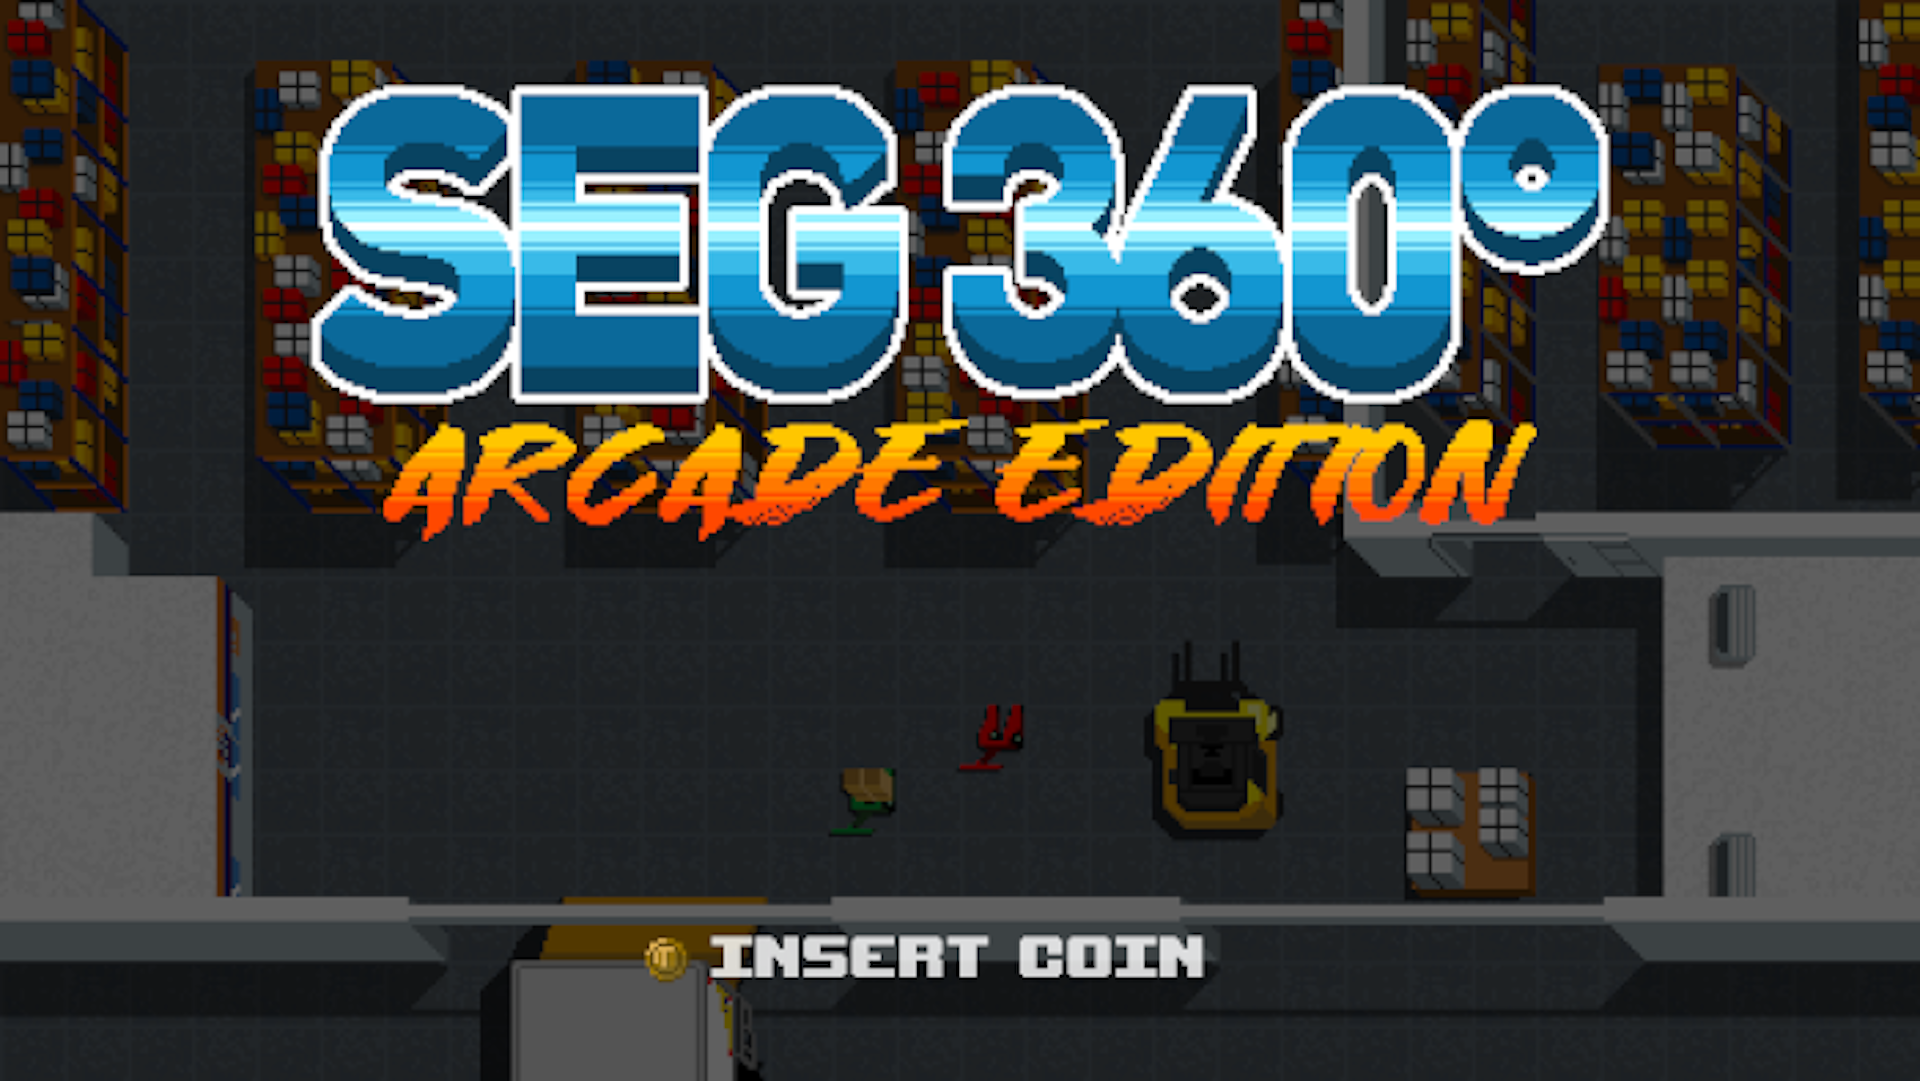 SEG 360° Arcade Edition